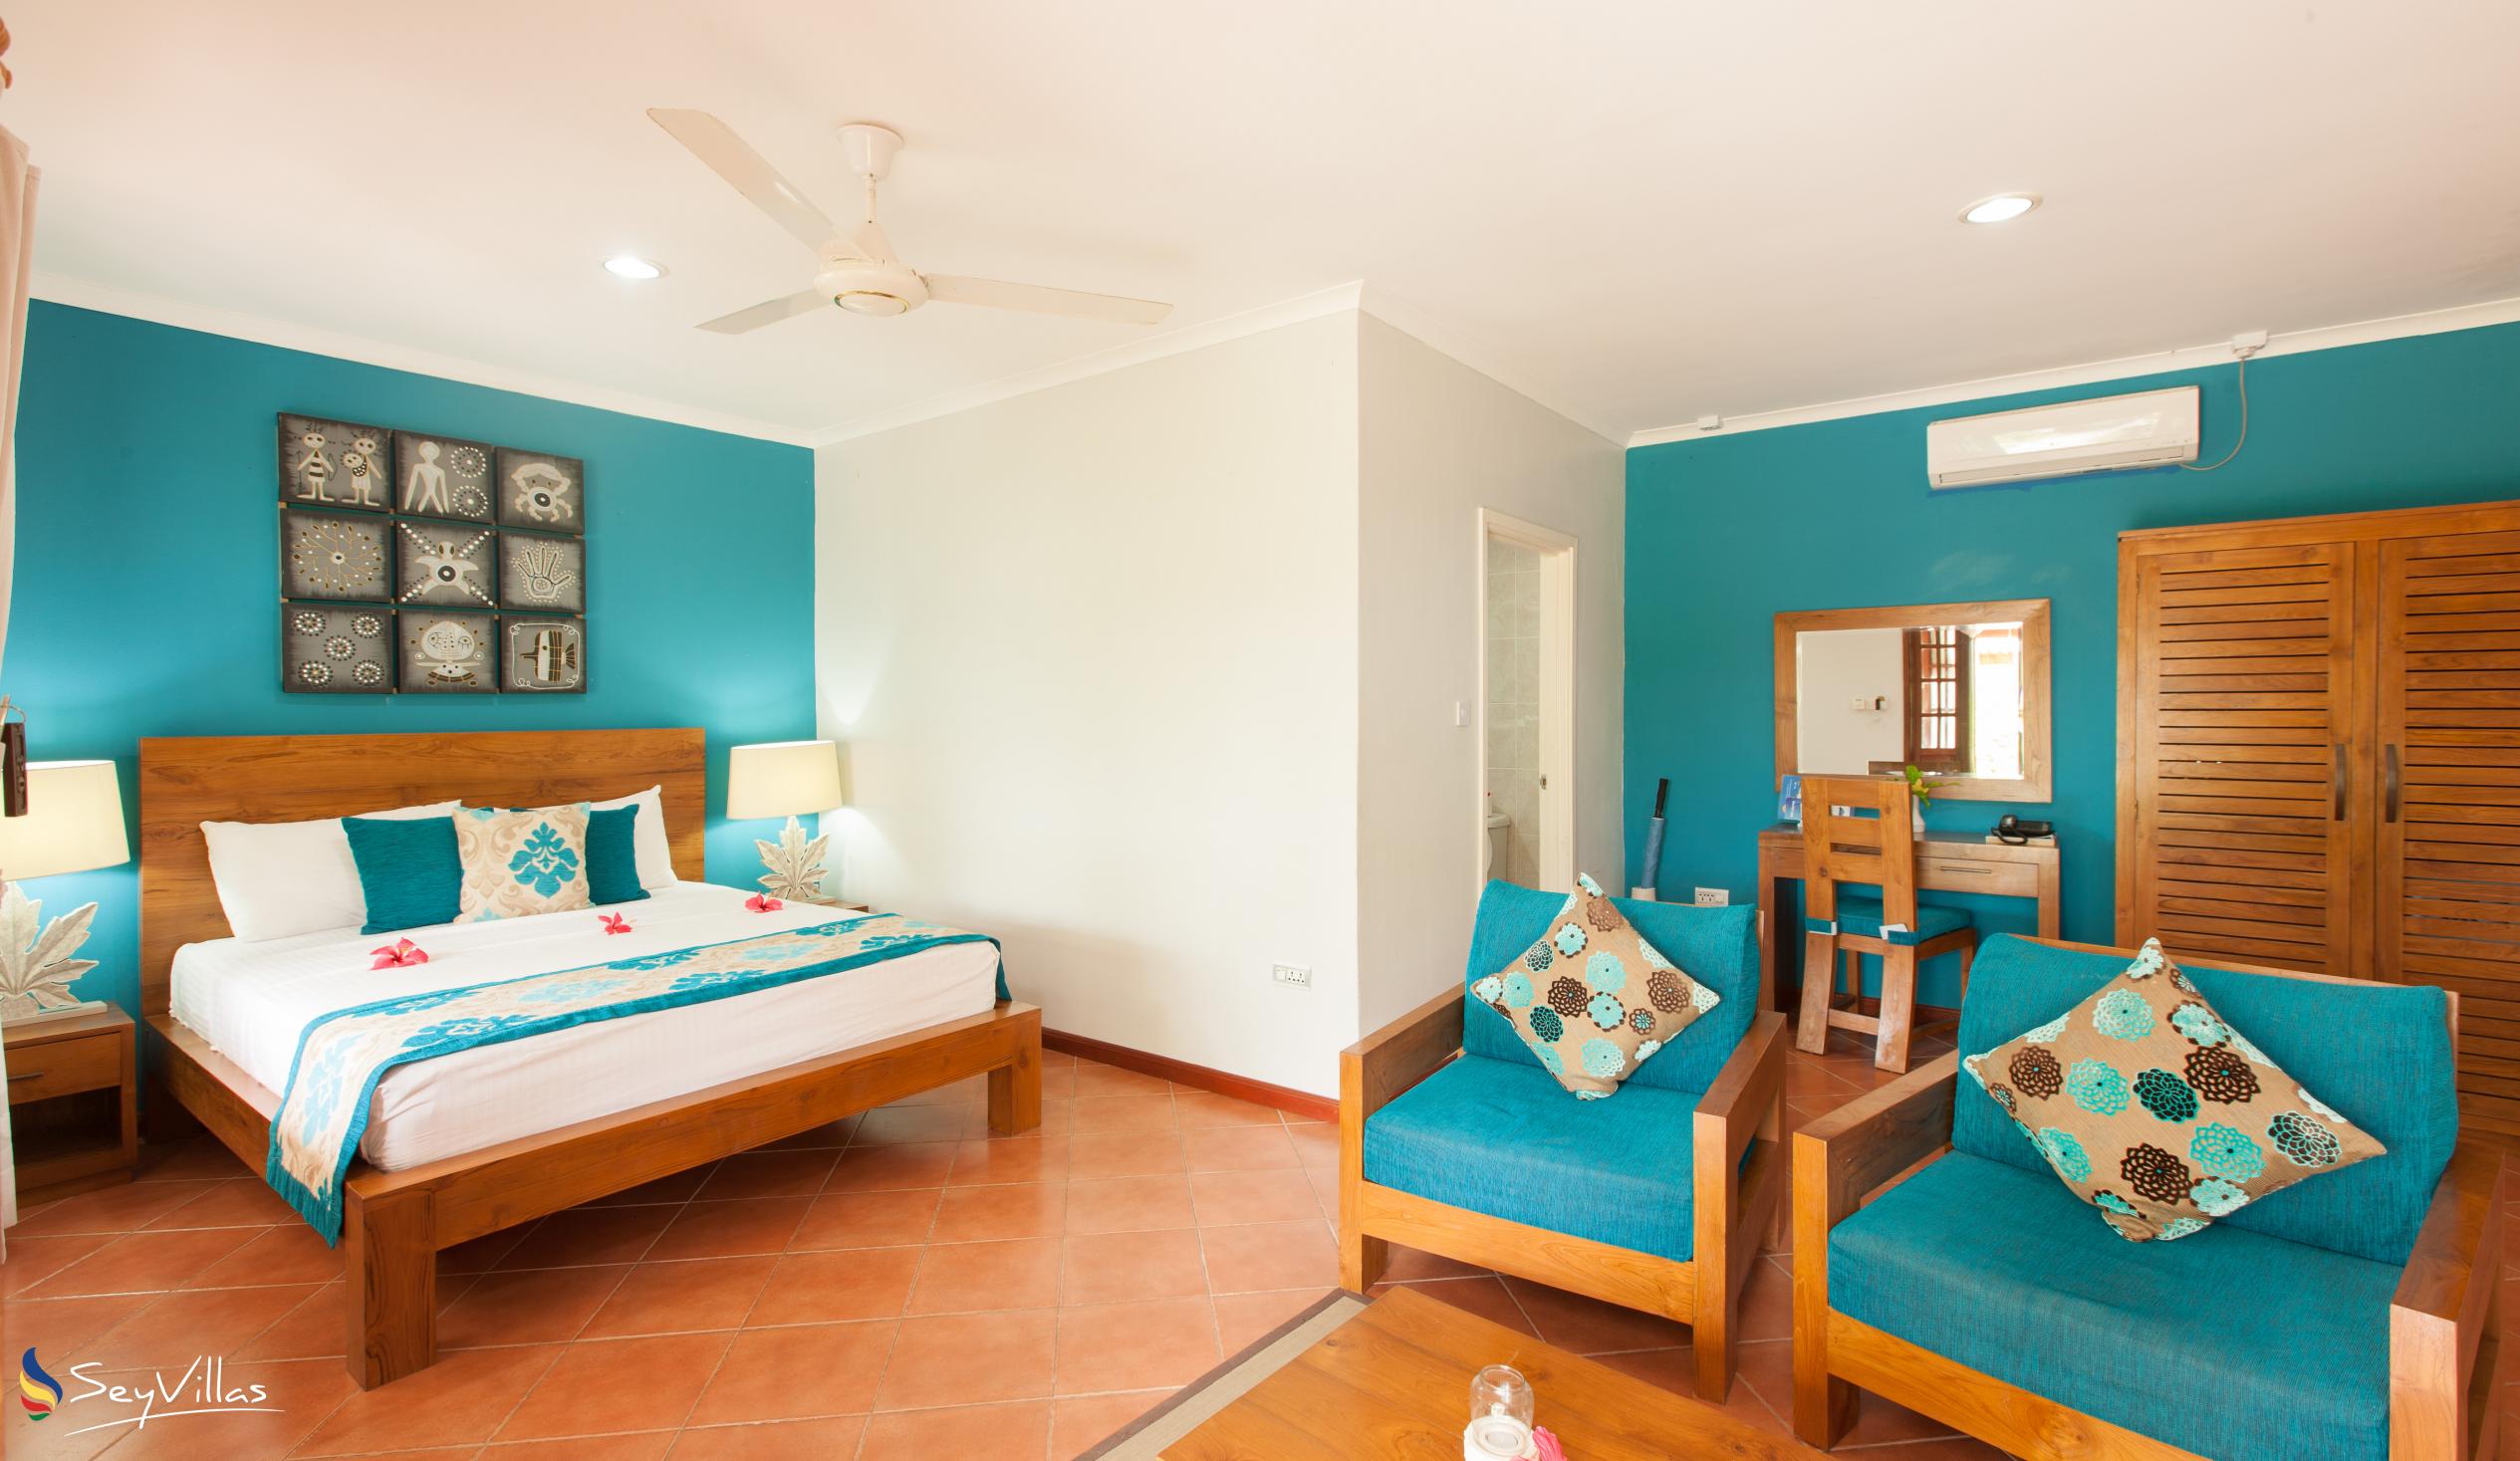 Foto 32: Villas de Mer - Superior Zimmer - Praslin (Seychellen)